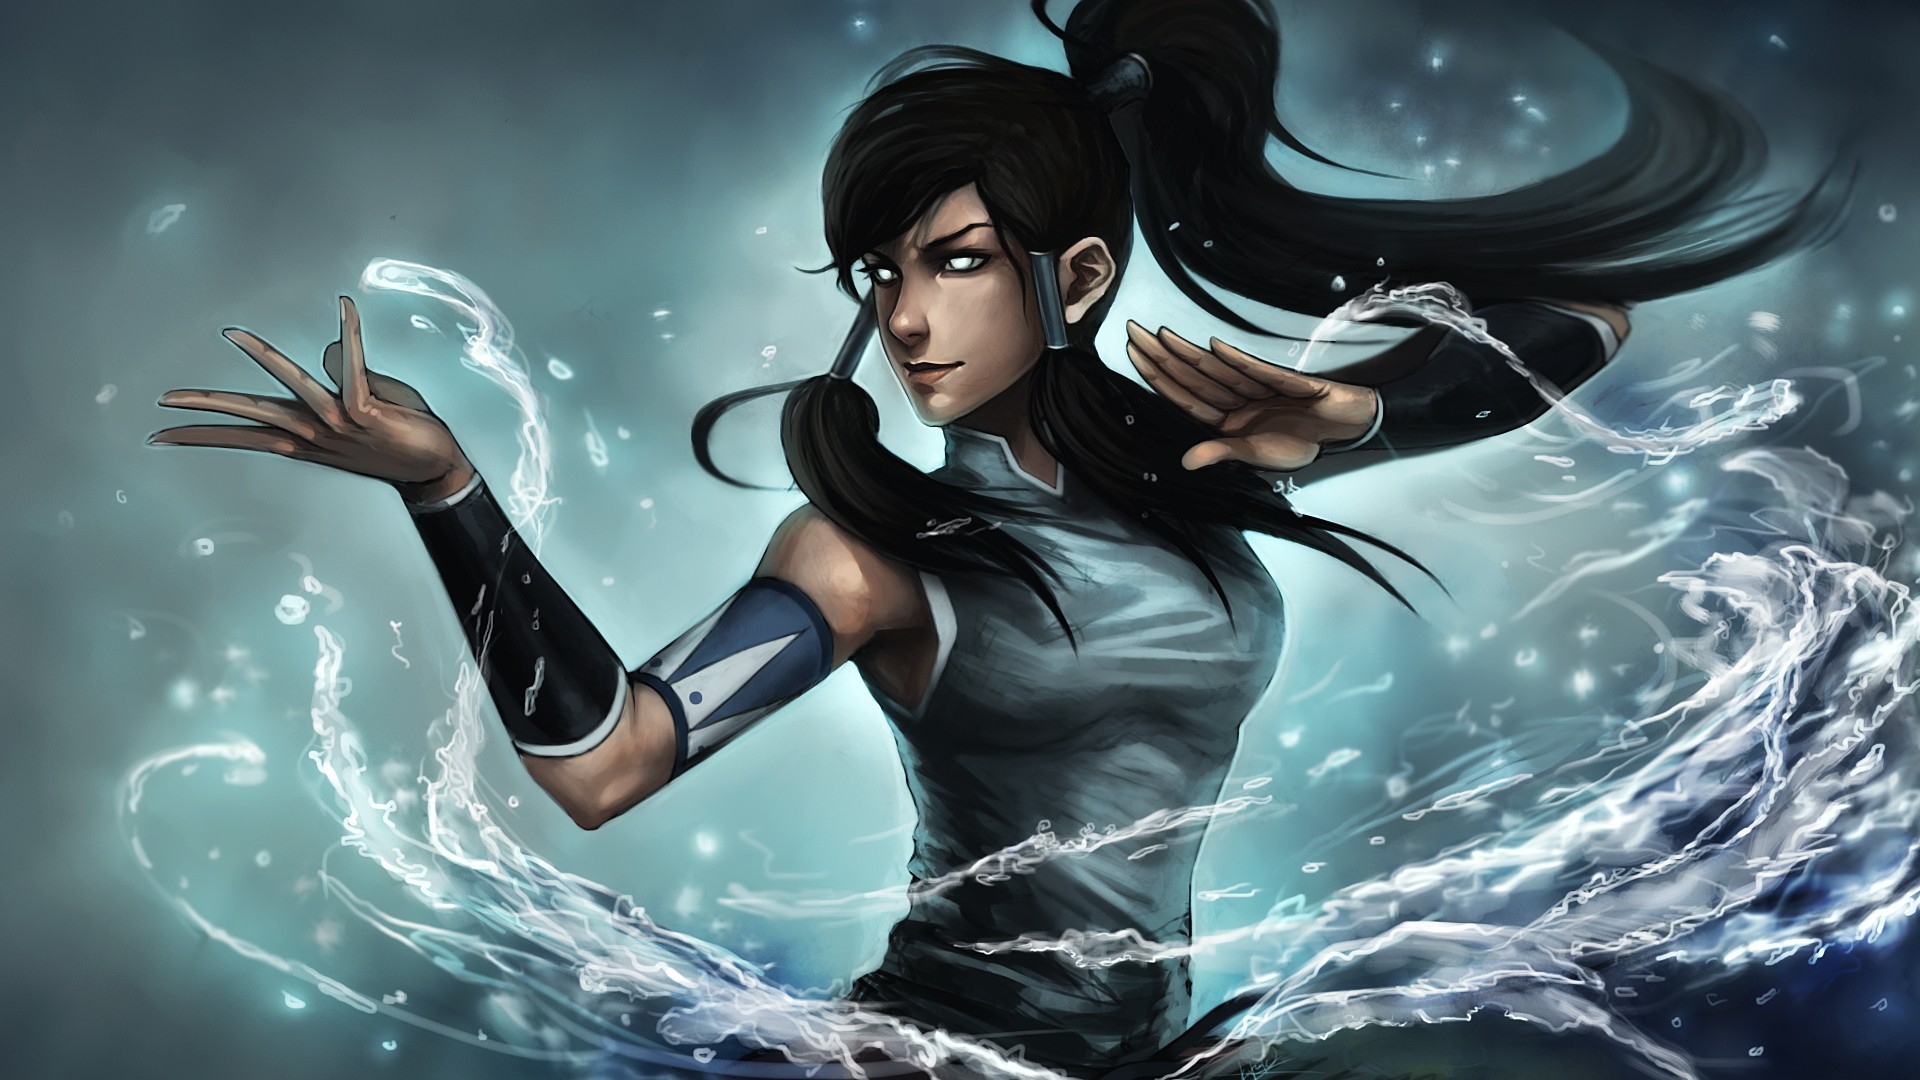 General 1920x1080 The Legend of Korra Korra Avatar water fantasy girl dark hair magic